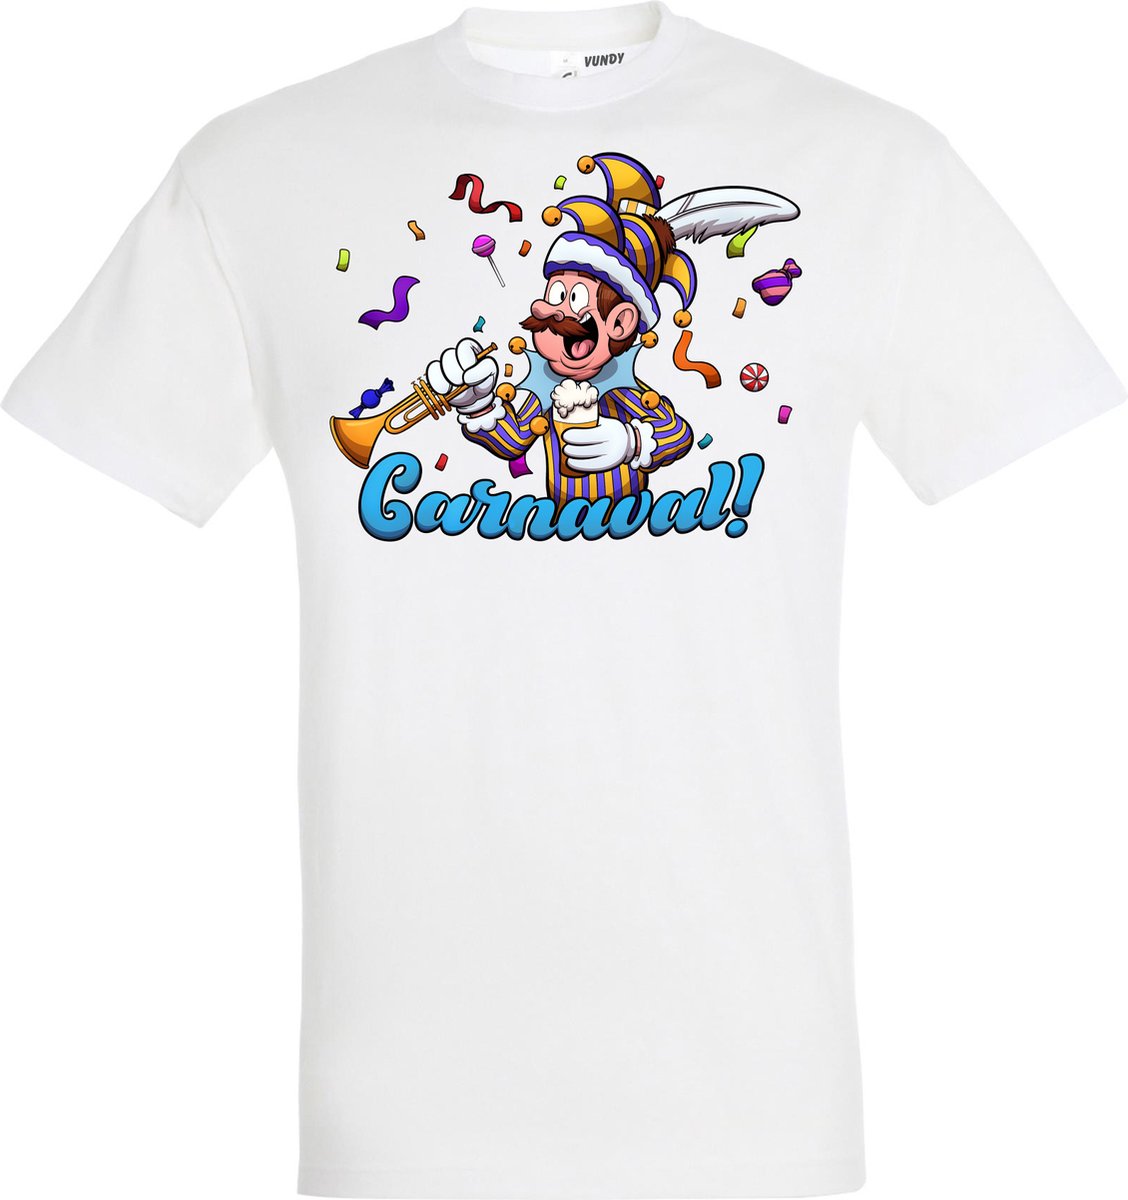 T-shirt Carnavalluh | Carnaval | Carnavalskleding Dames Heren | Wit | maat 3XL